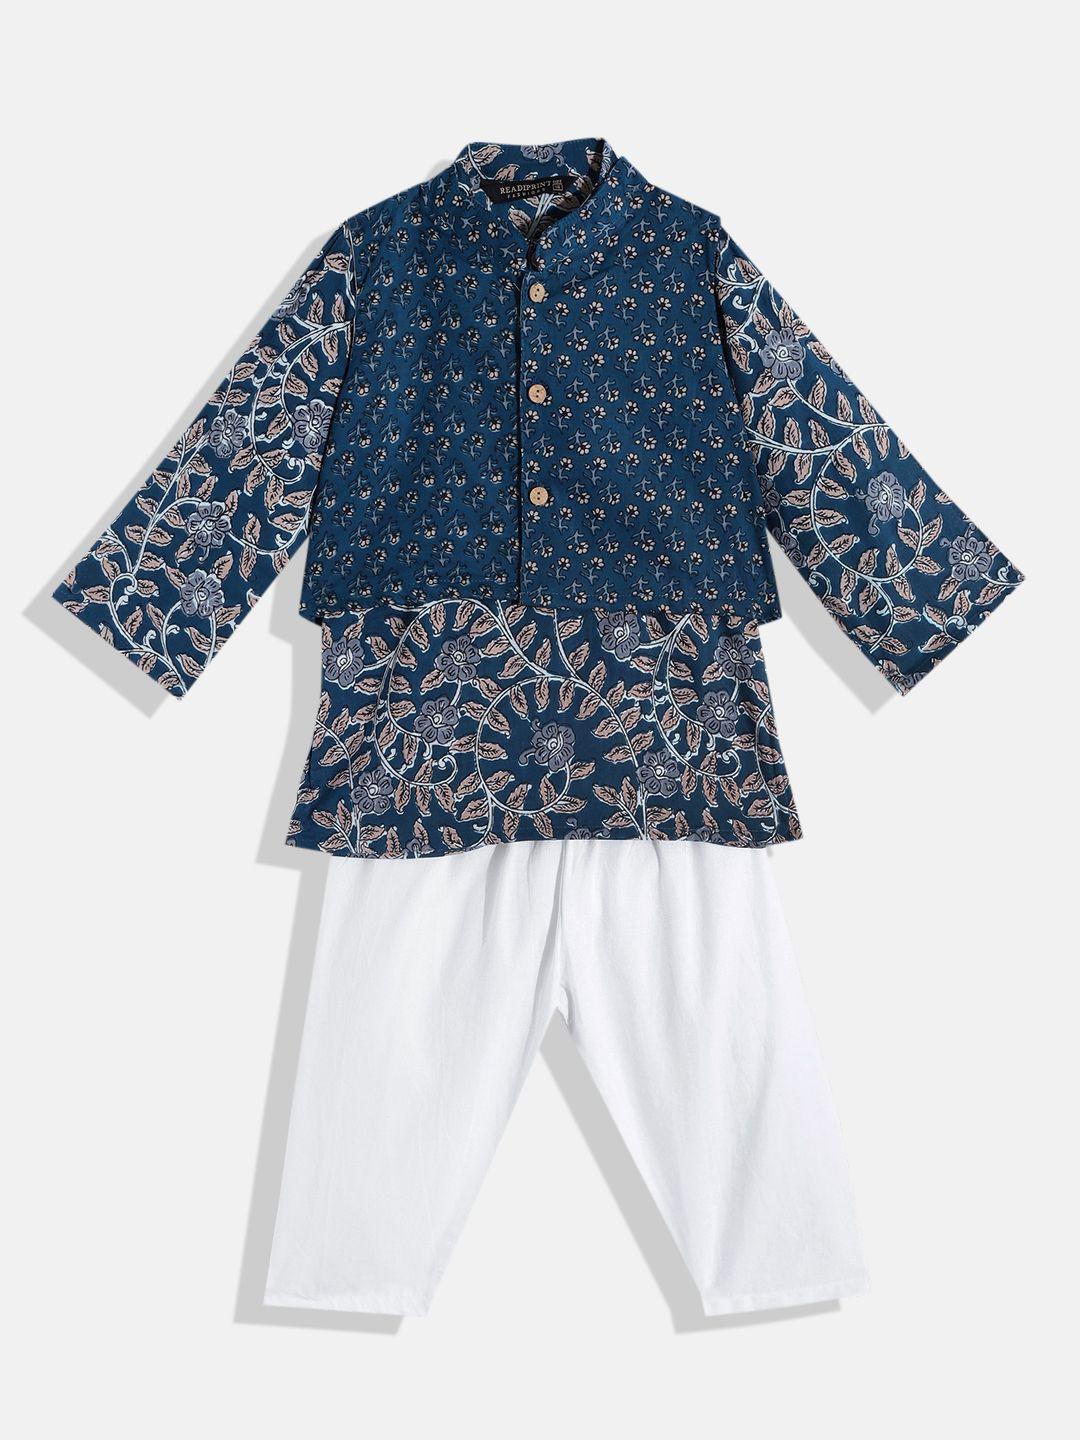 readiprint fashions boys blue & white floral cotton kurta with pyjamas & nehru jacket